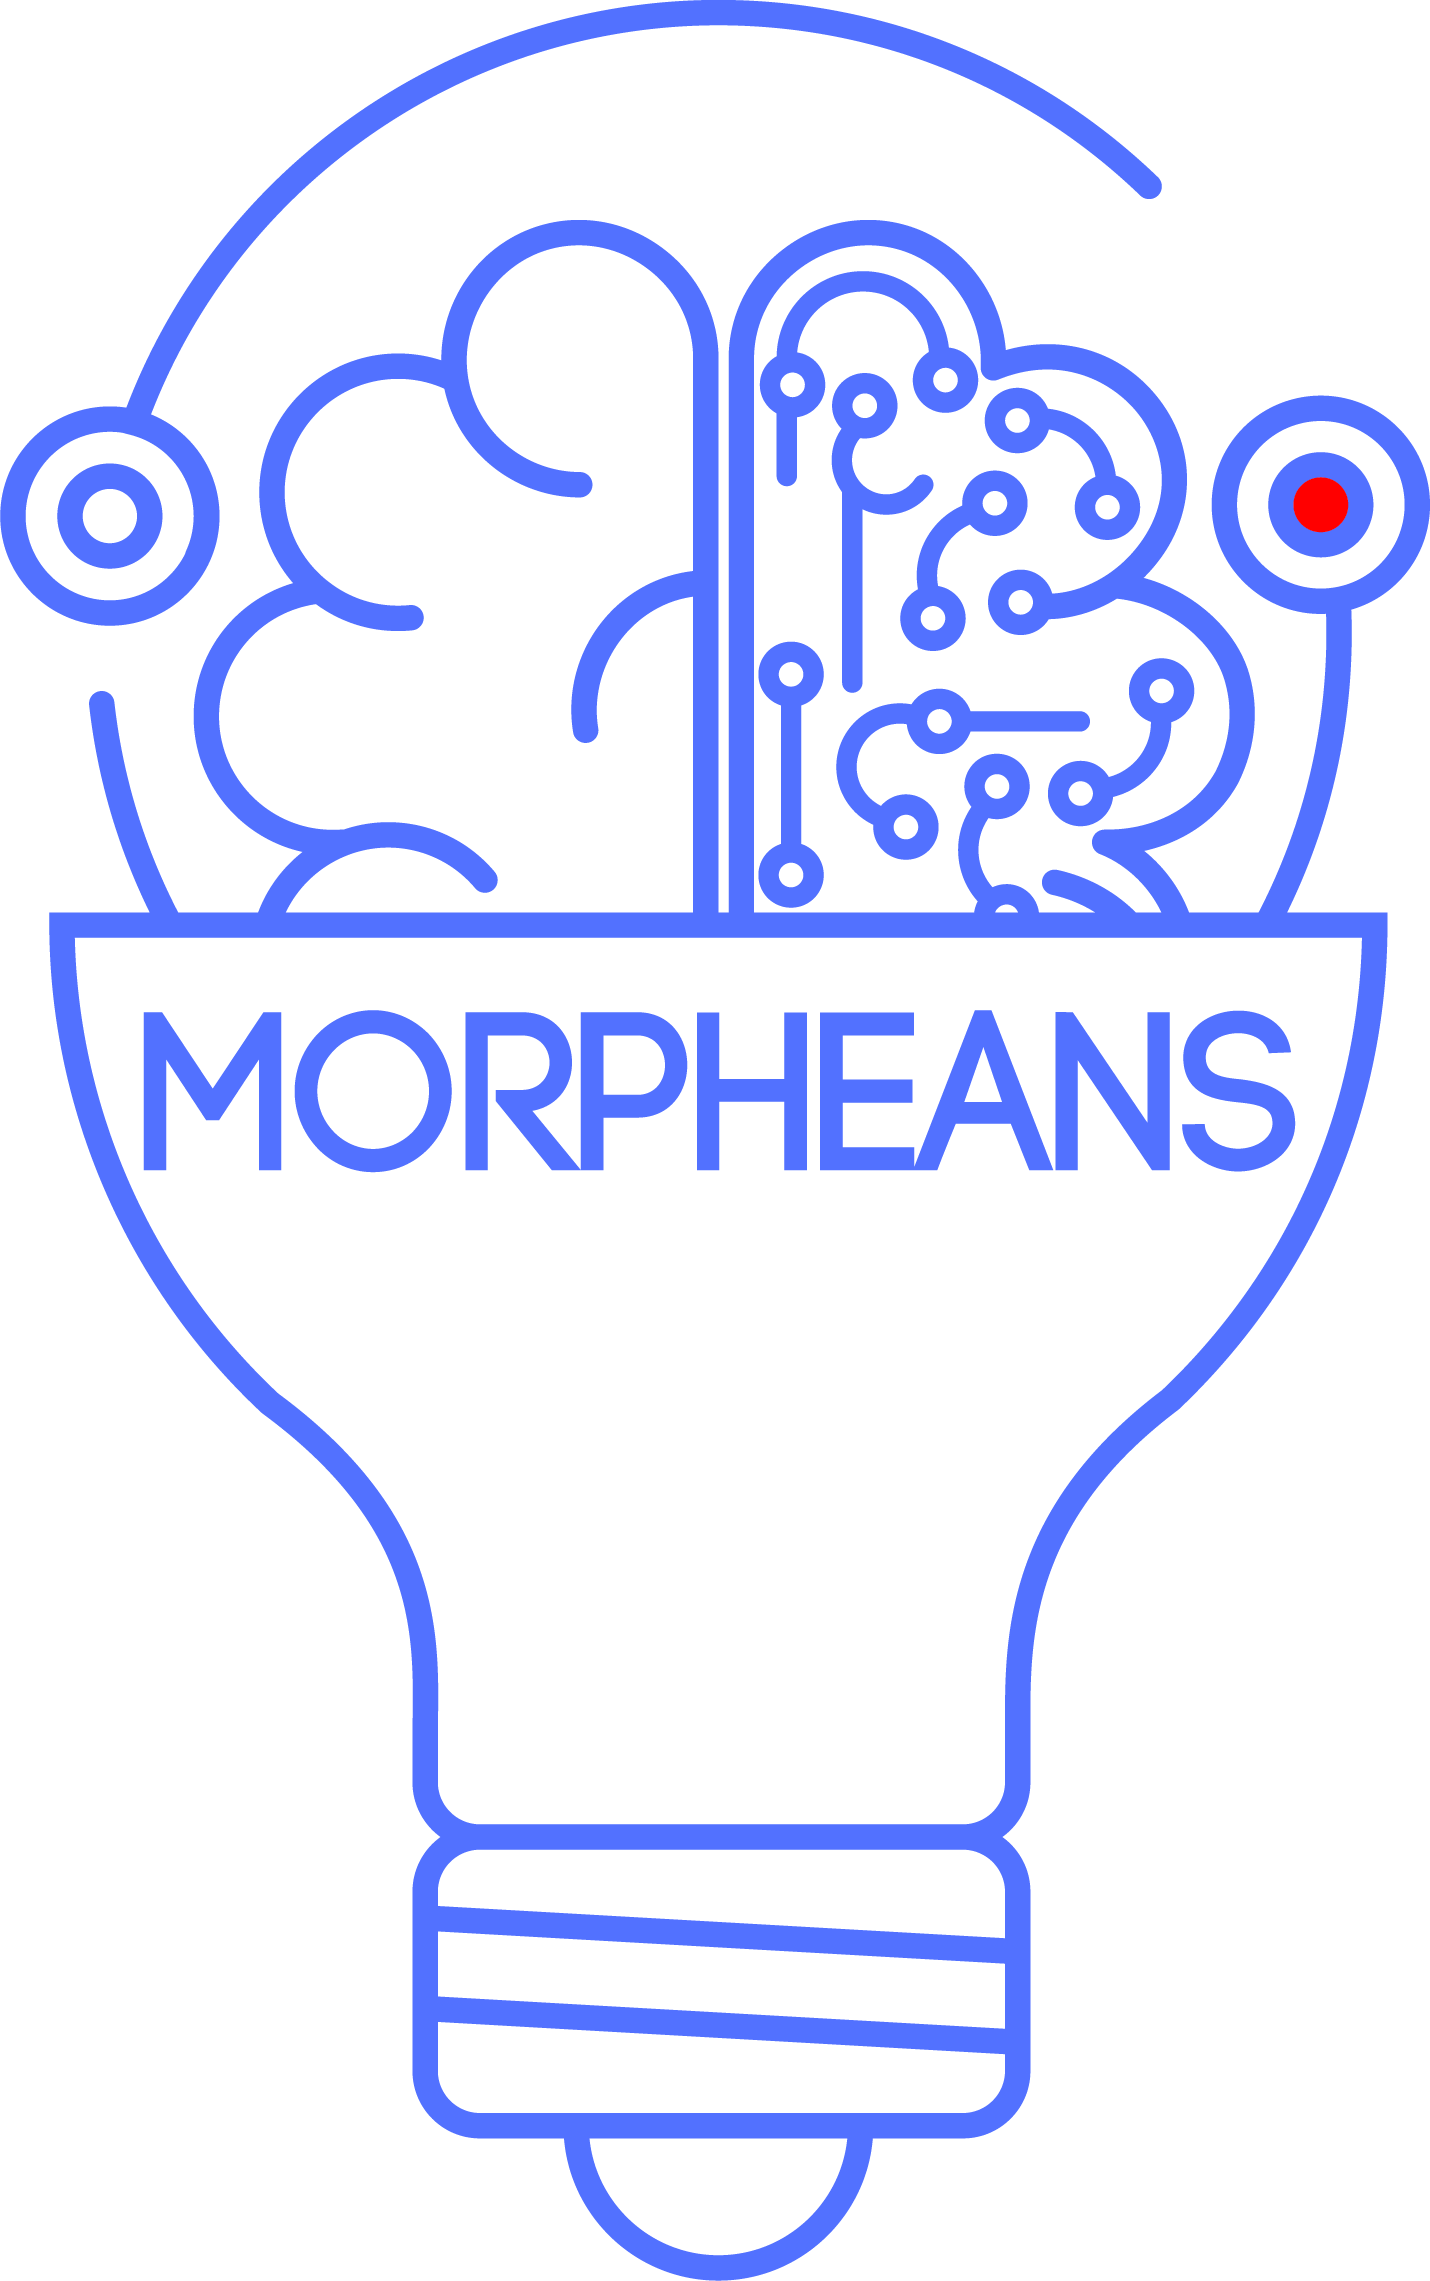 MORPHEANS